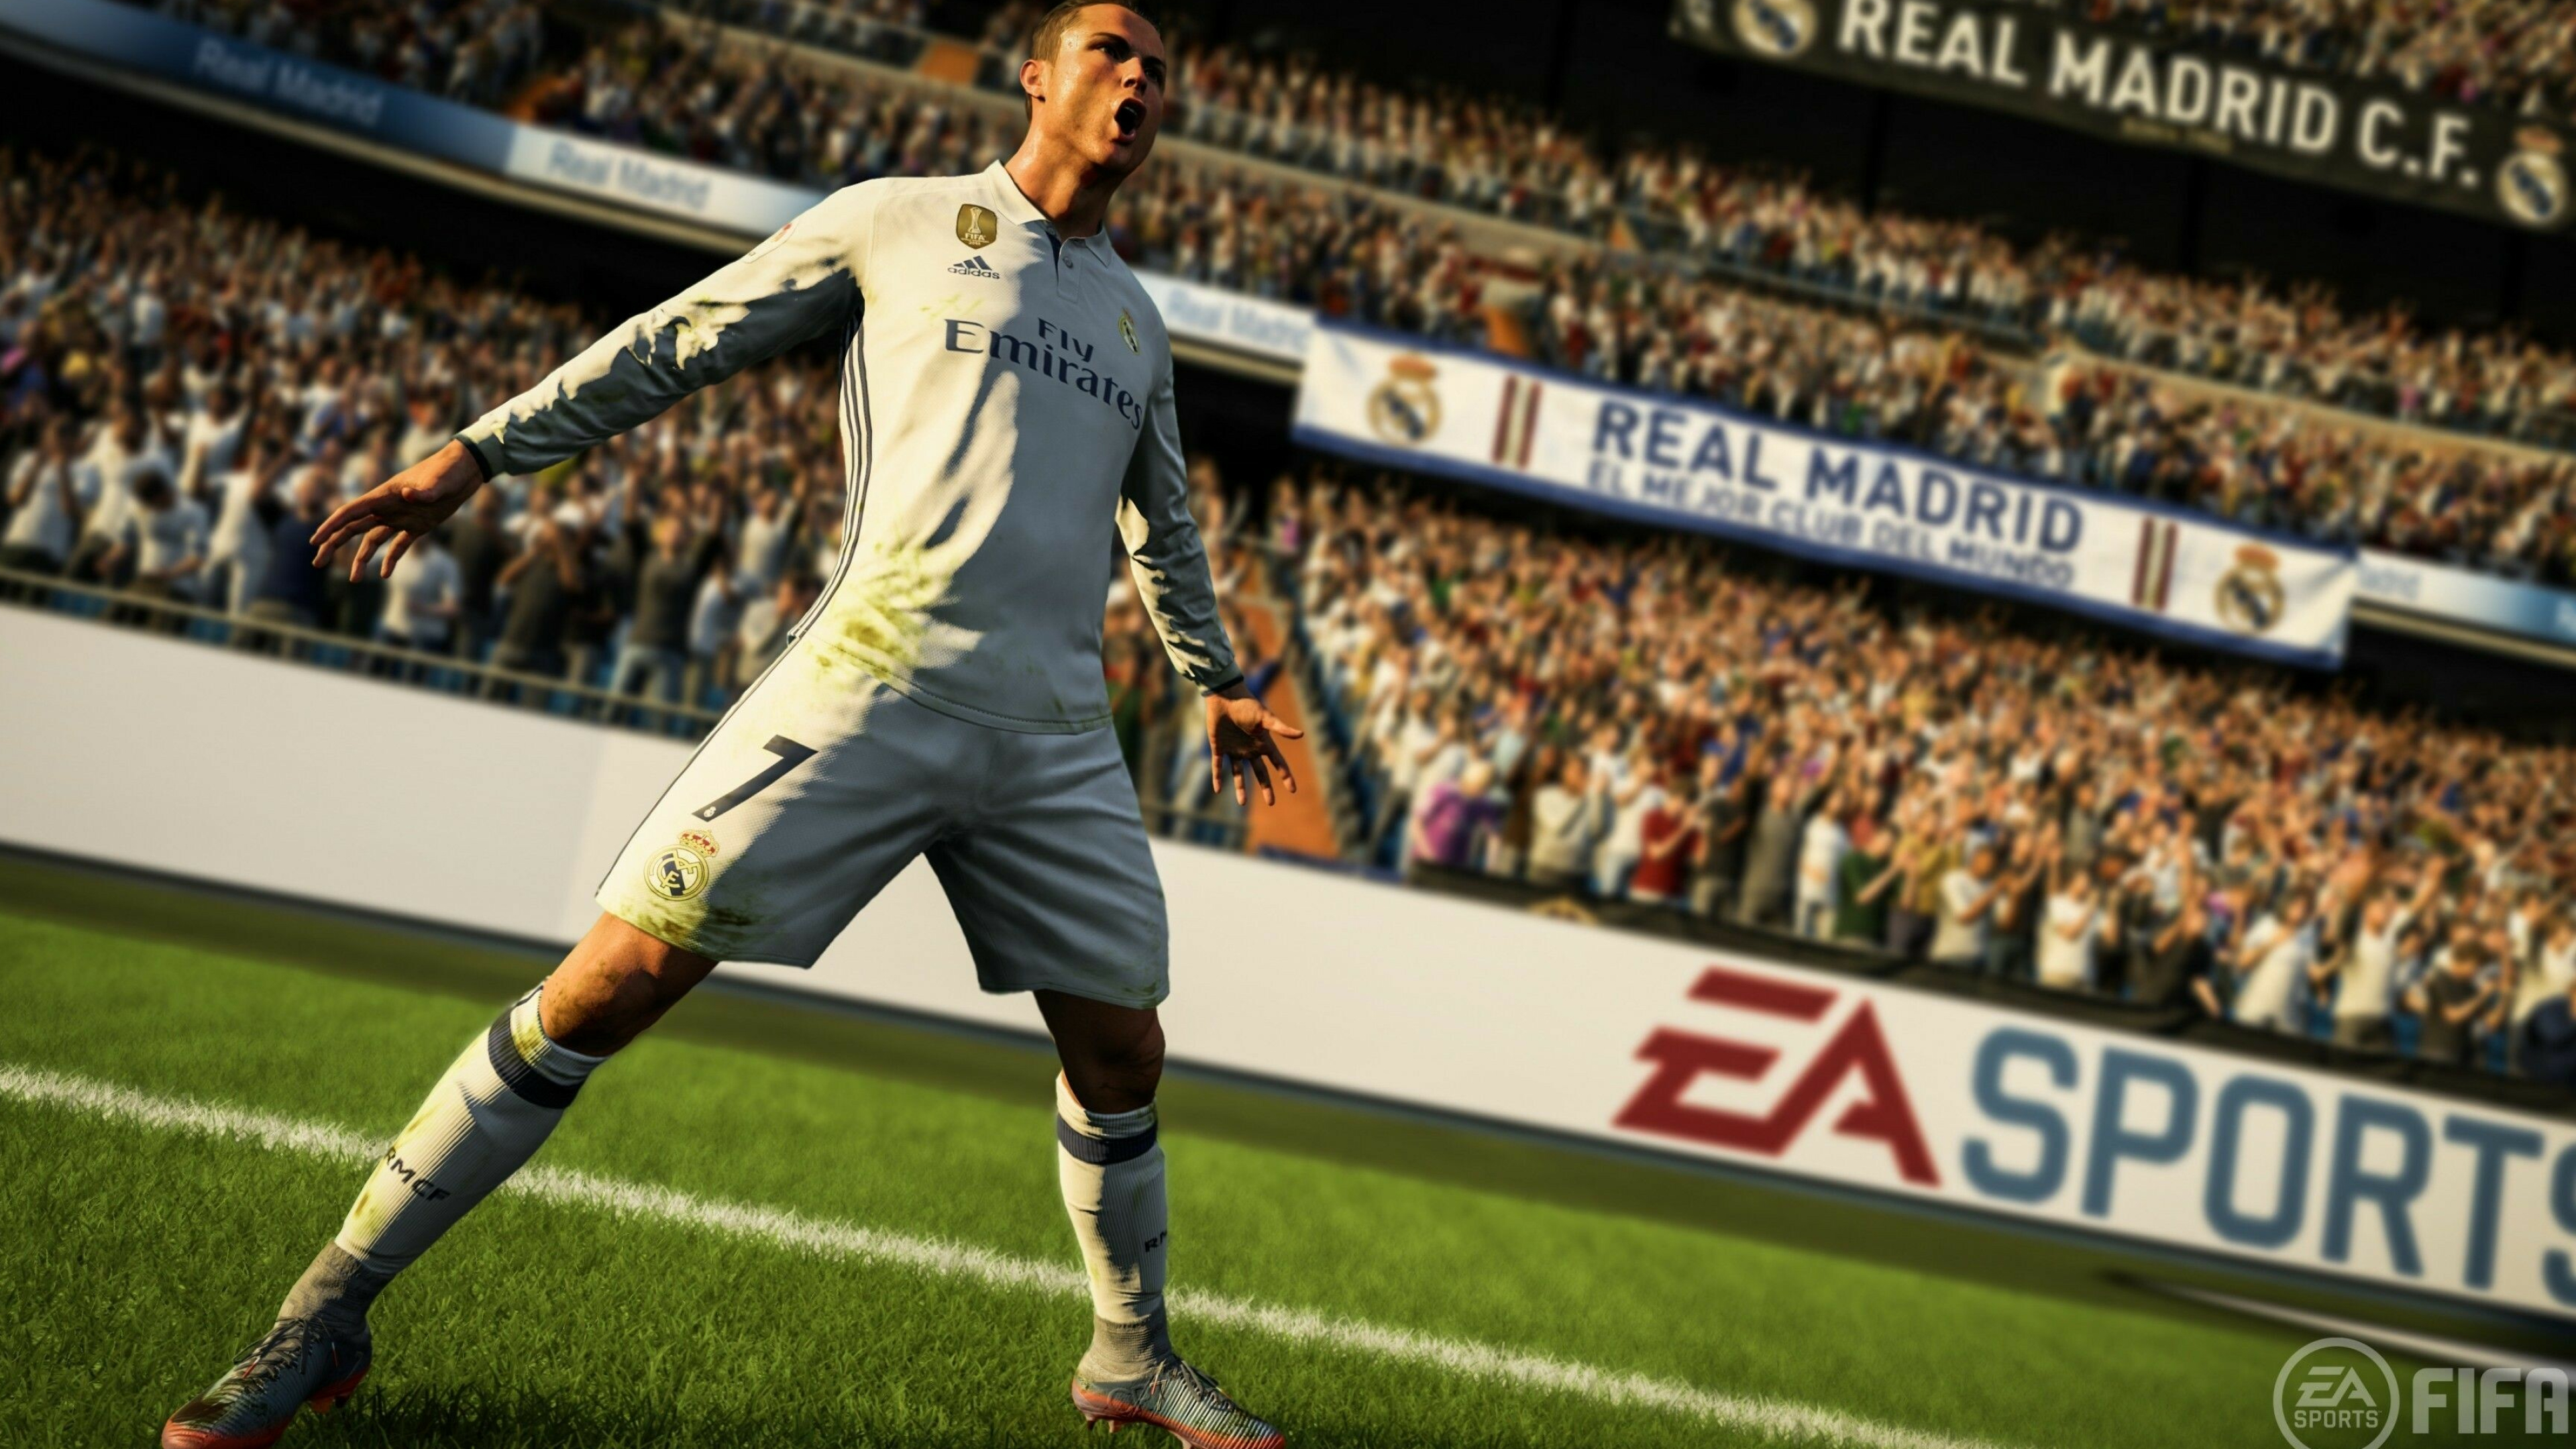 FIFA: EA Sports FC, A series of association football video games. 3840x2160 4K Wallpaper.